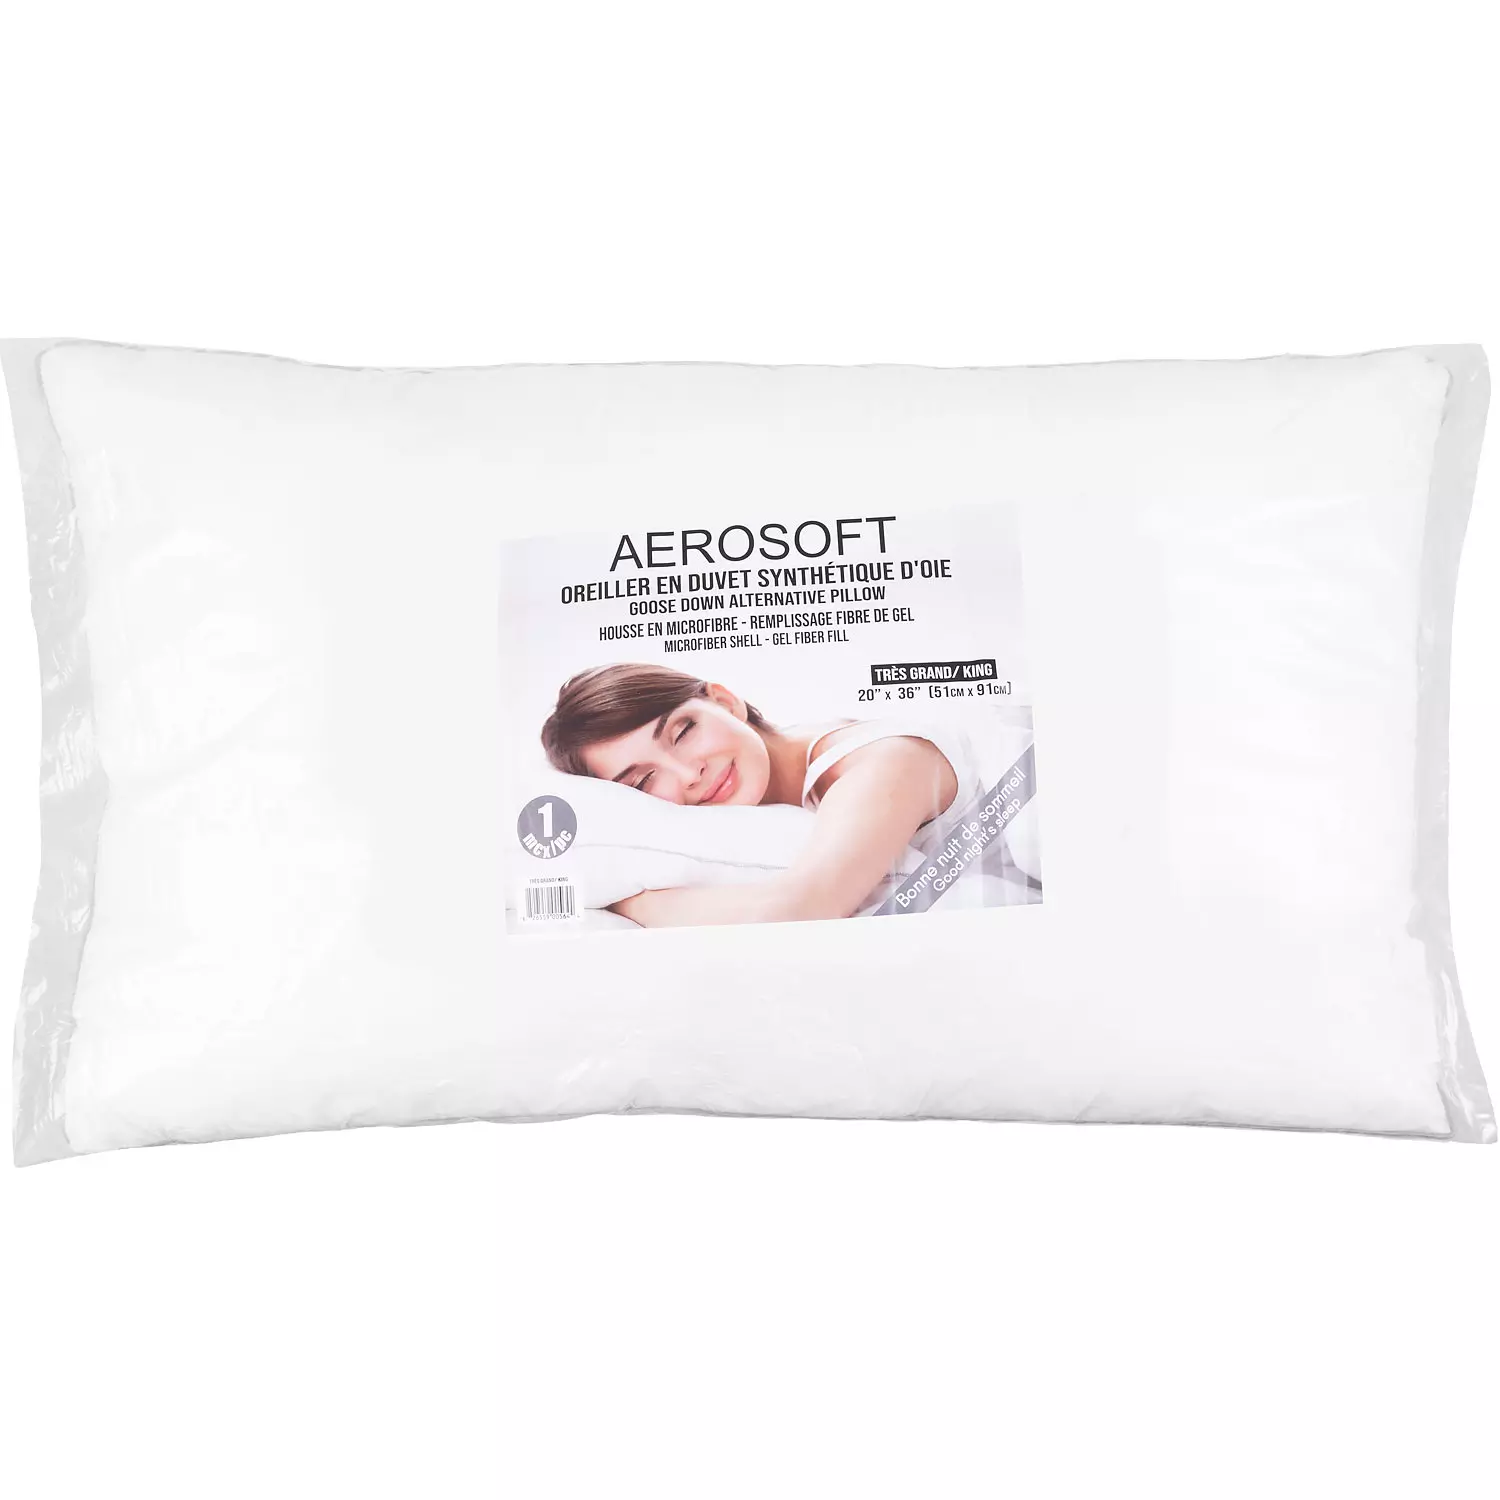 Aerosoft - Goose down alternative pillow, 20"x36" - King